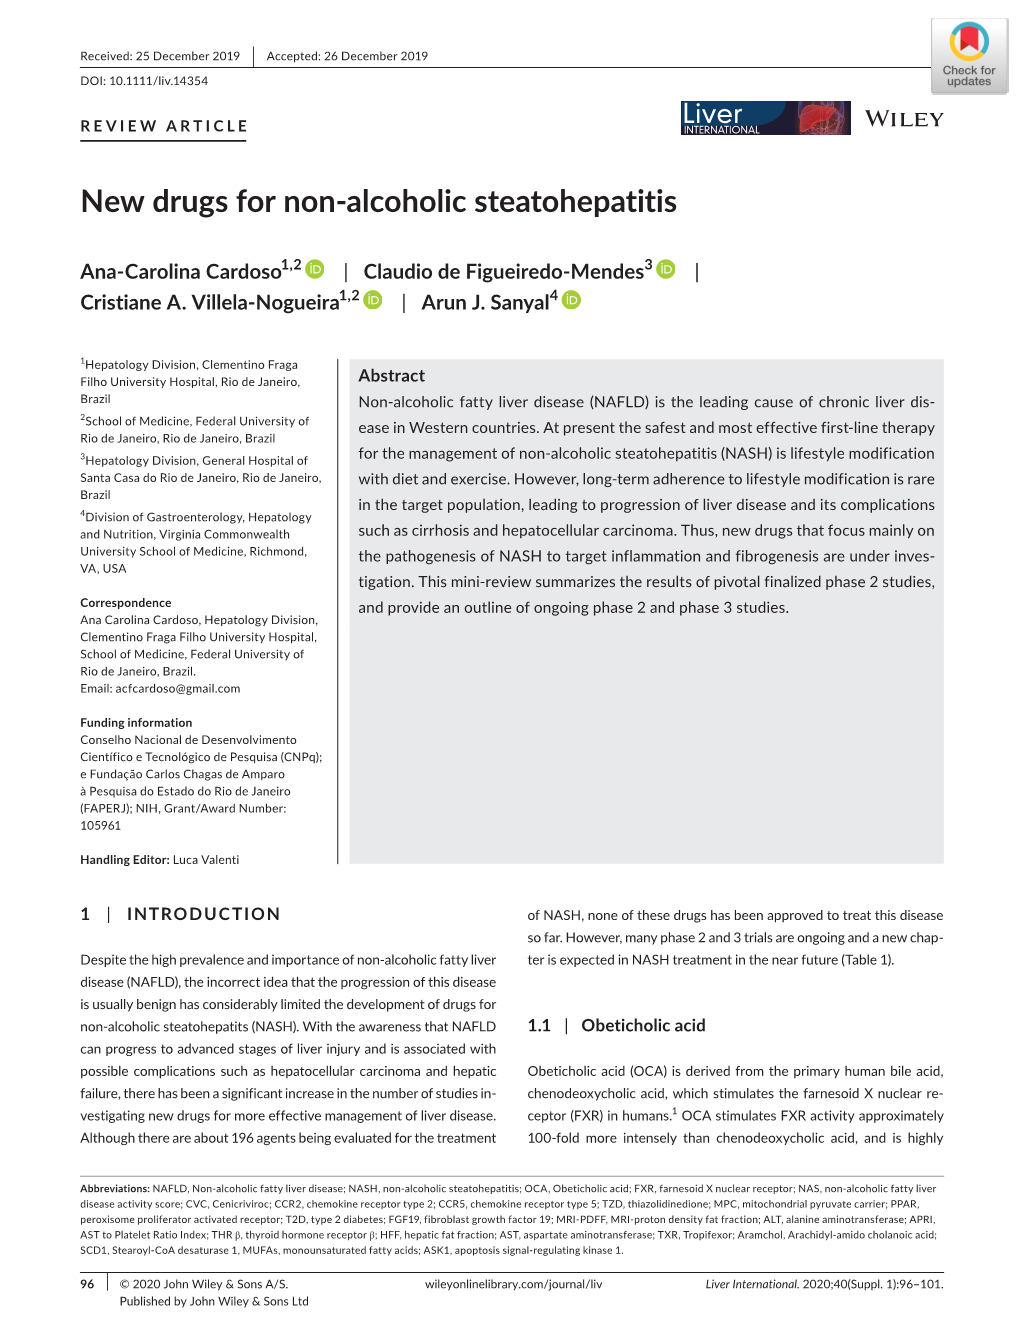 New Drugs for Non‐Alcoholic Steatohepatitis